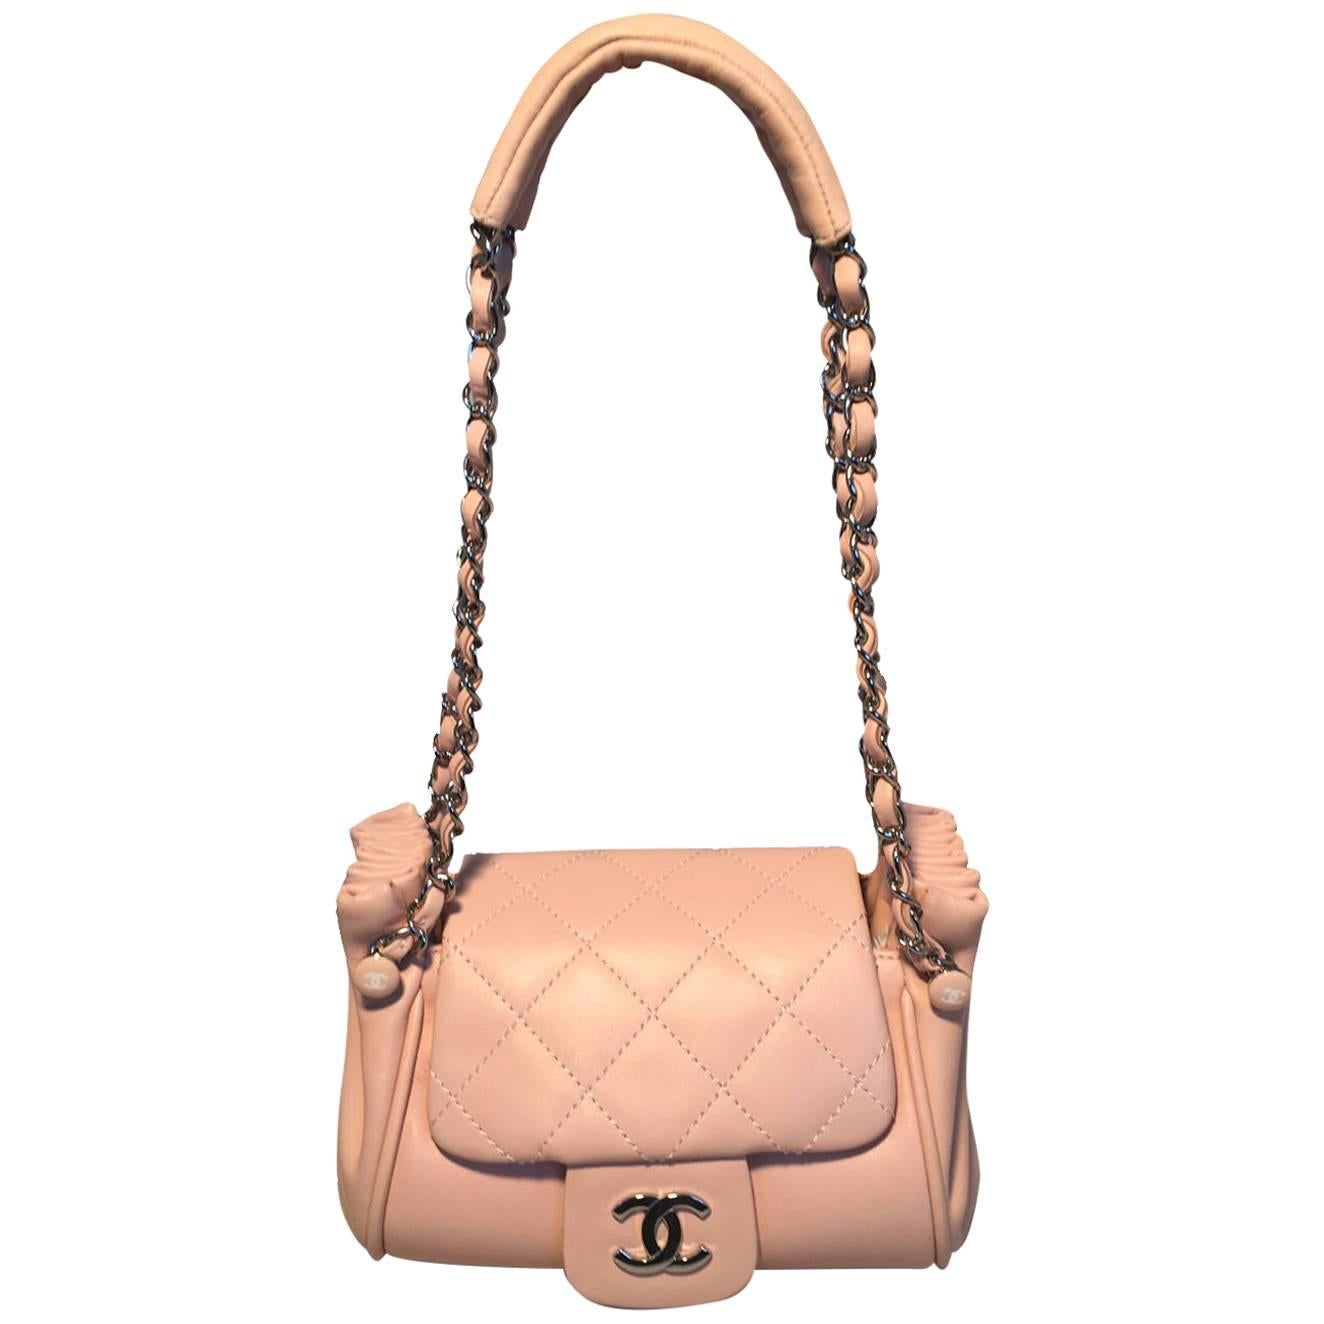 Chanel RARE Pink leather Mini Flap Classic Handbag